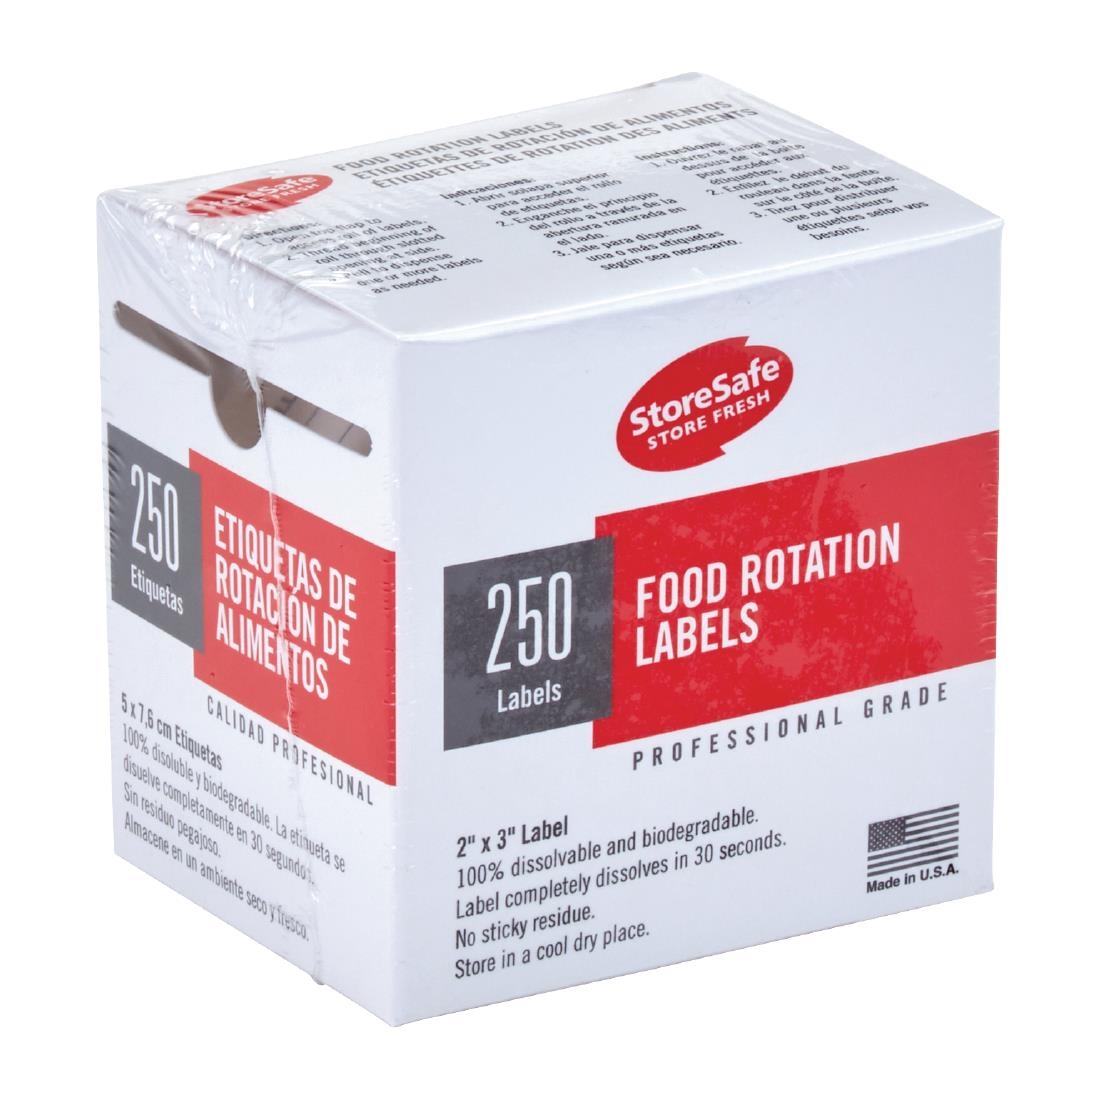 StoreSafe Lebensmitteletiketten | 24x 250 Etiketten